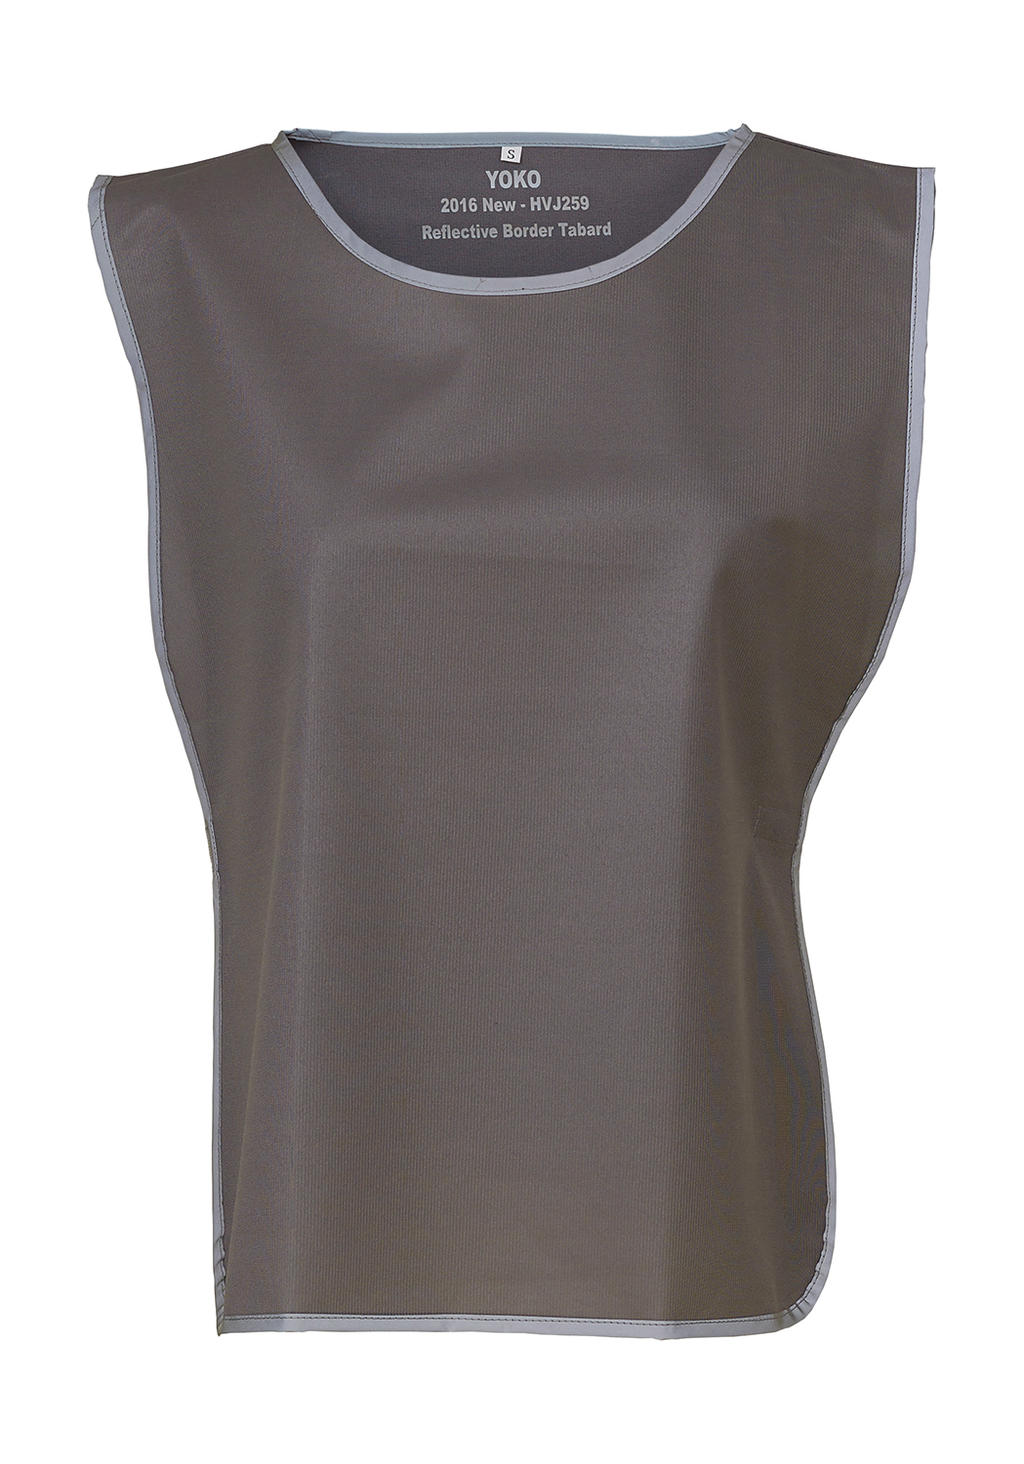  Fluo Reflective Border Tabard in Farbe Grey